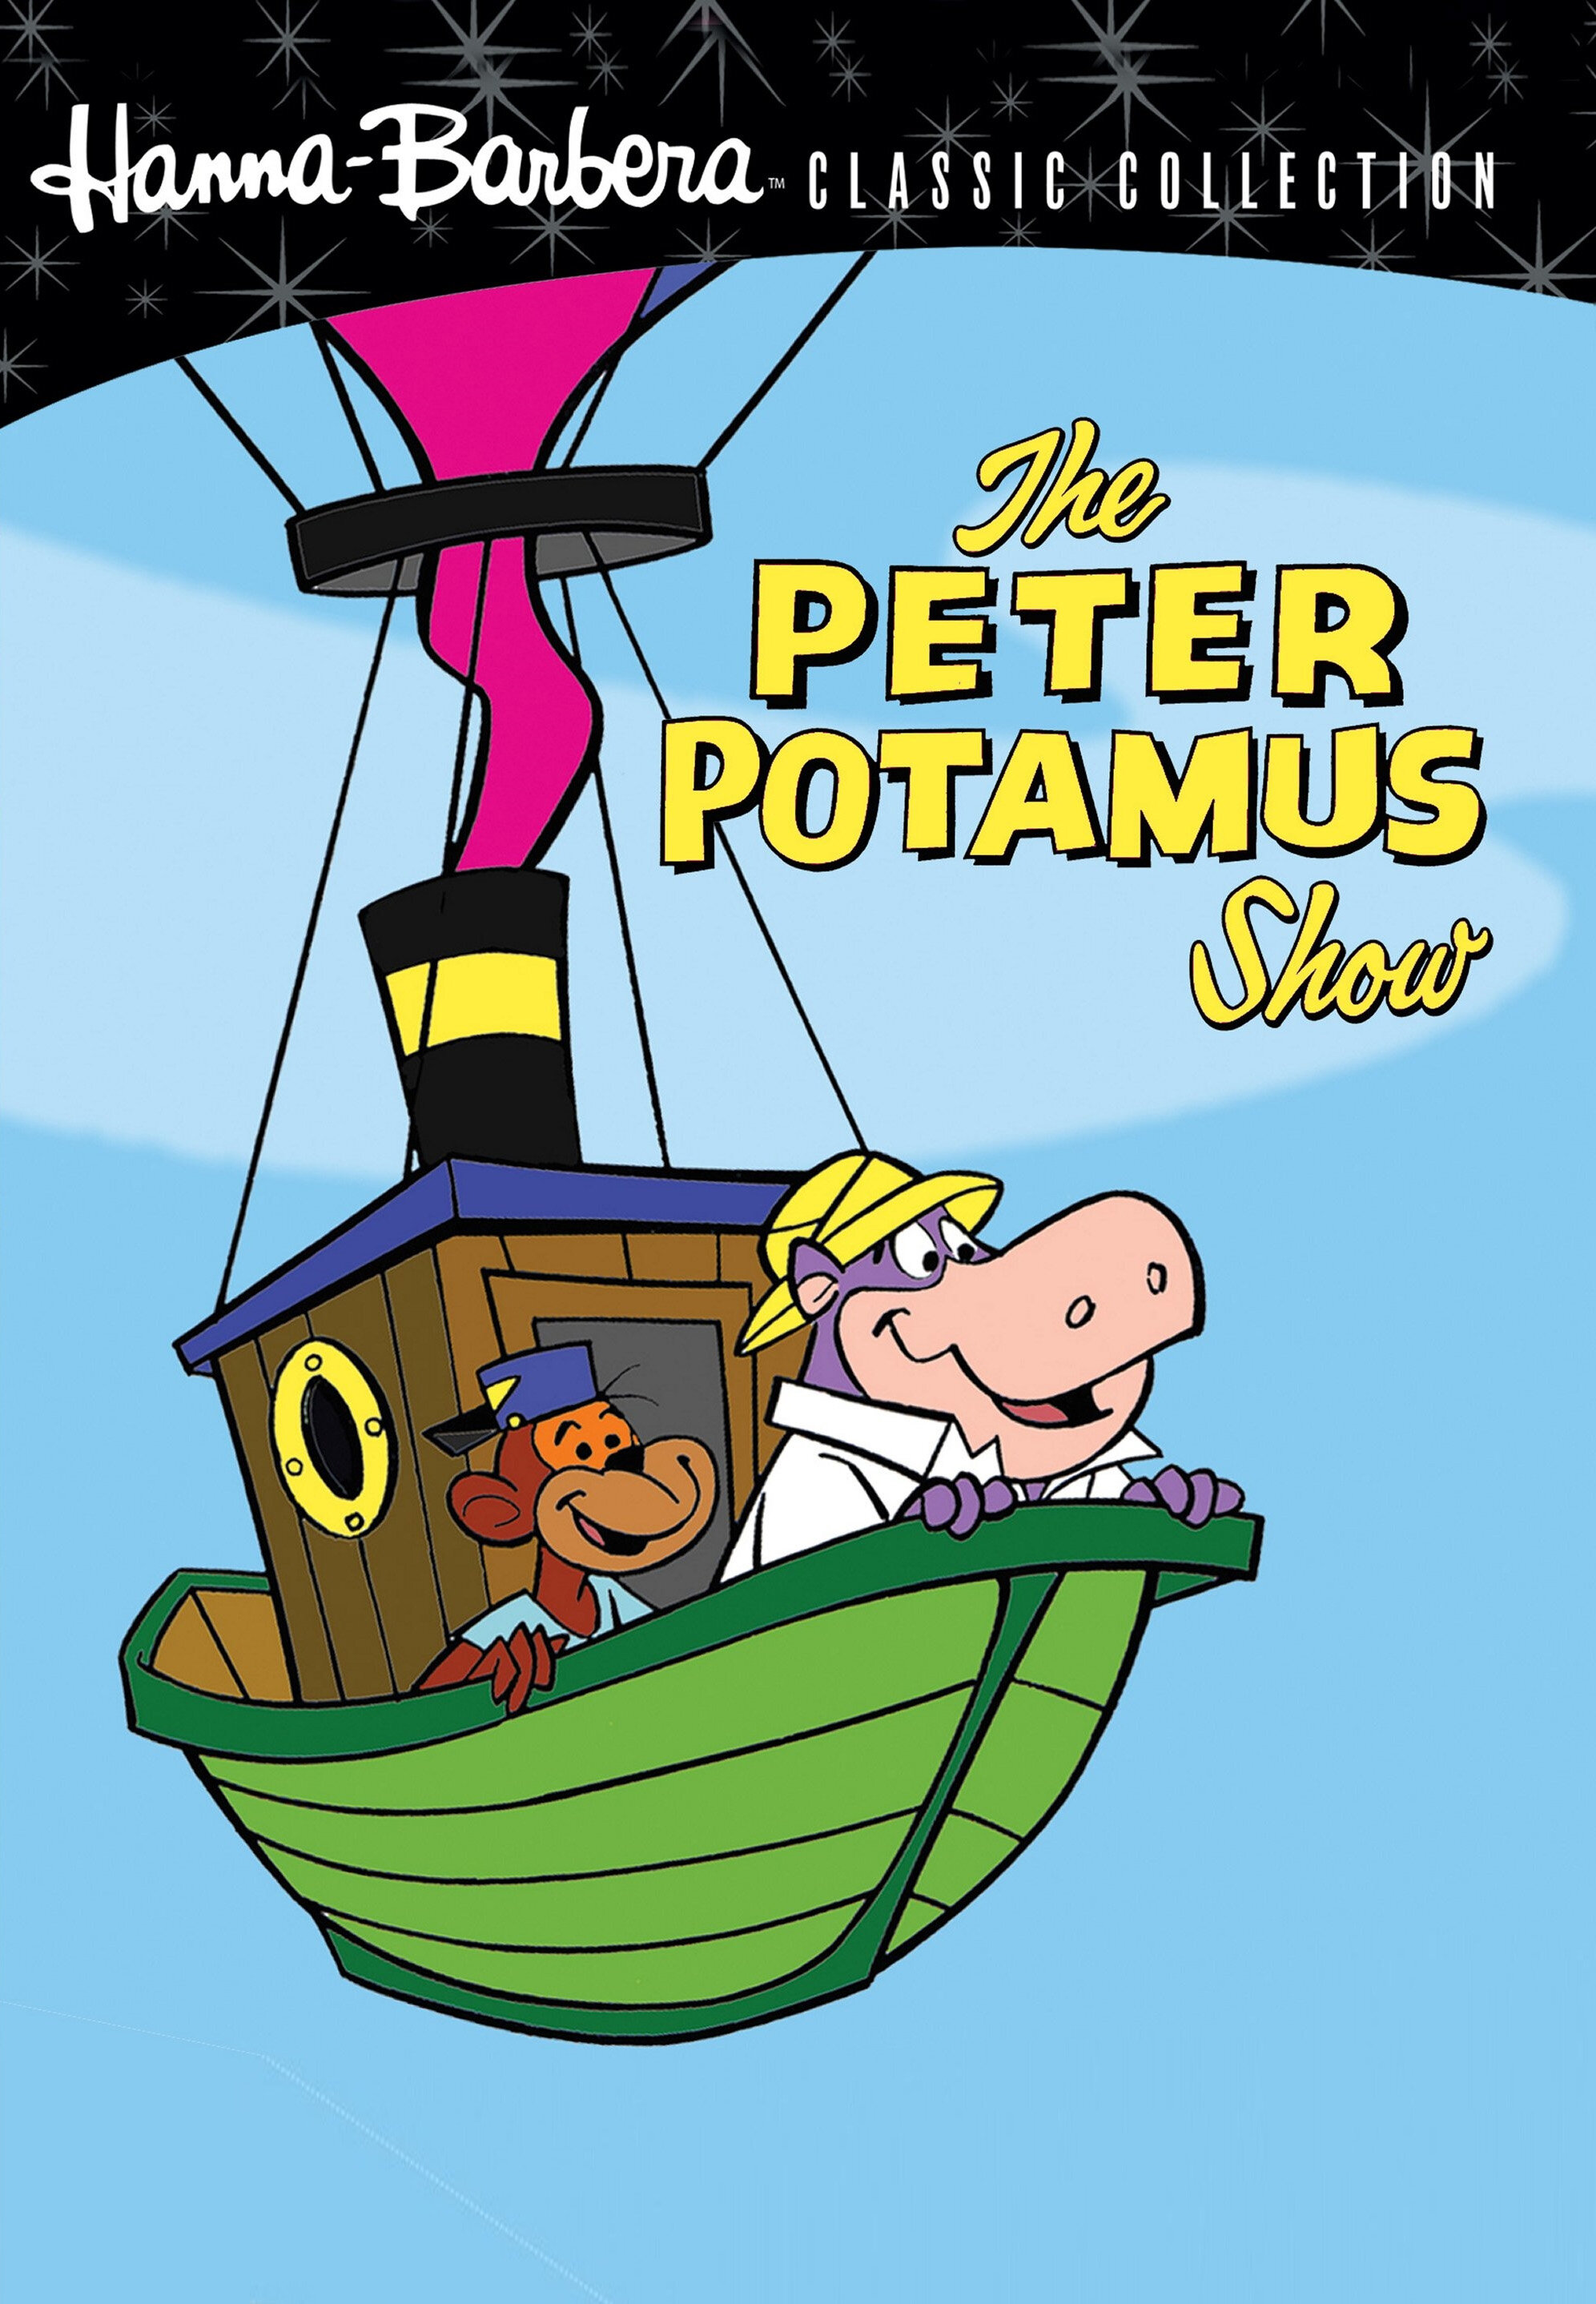 The Peter Potamus Show ne zaman